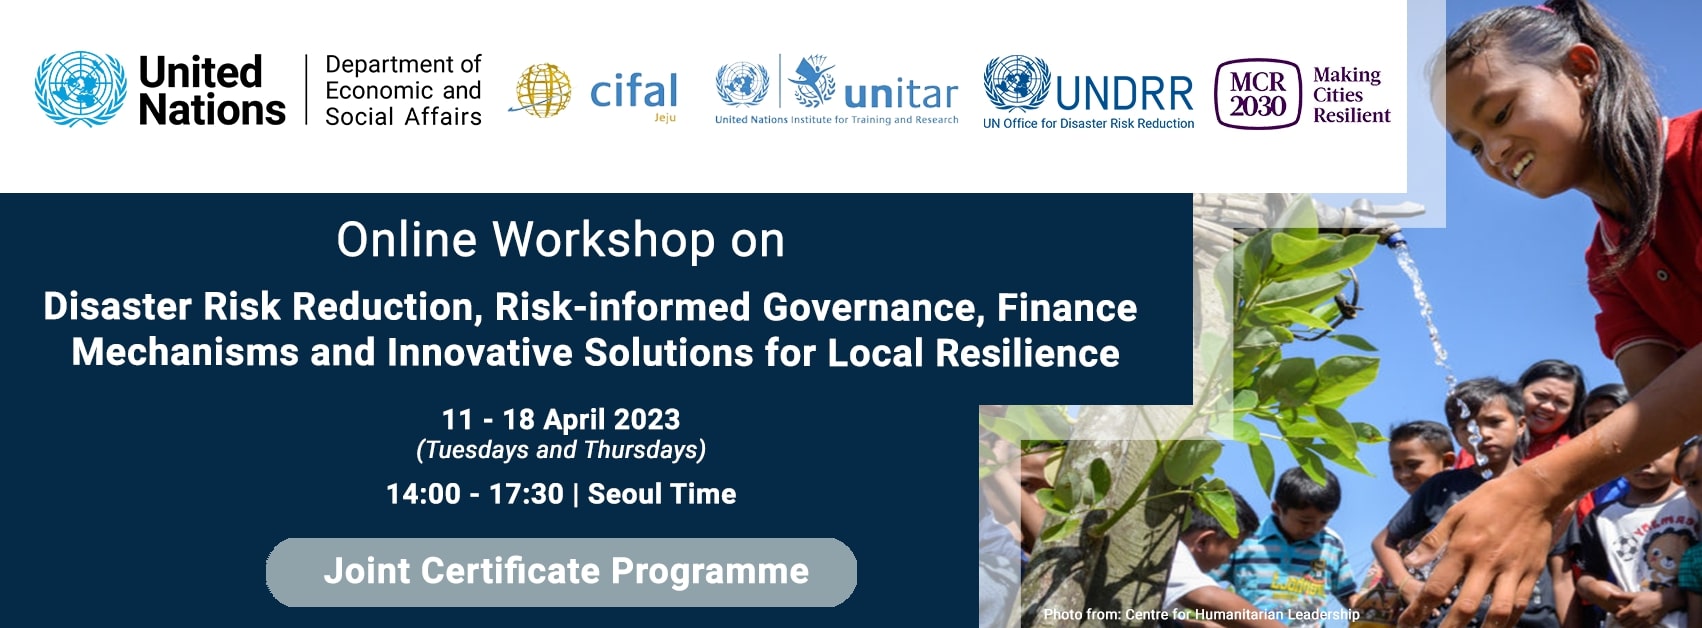 Online Workshop on Disaster Risk Reduction, Risk-informed Governance, Finance Mechanisms and Innovative Solutions for Local Resilience